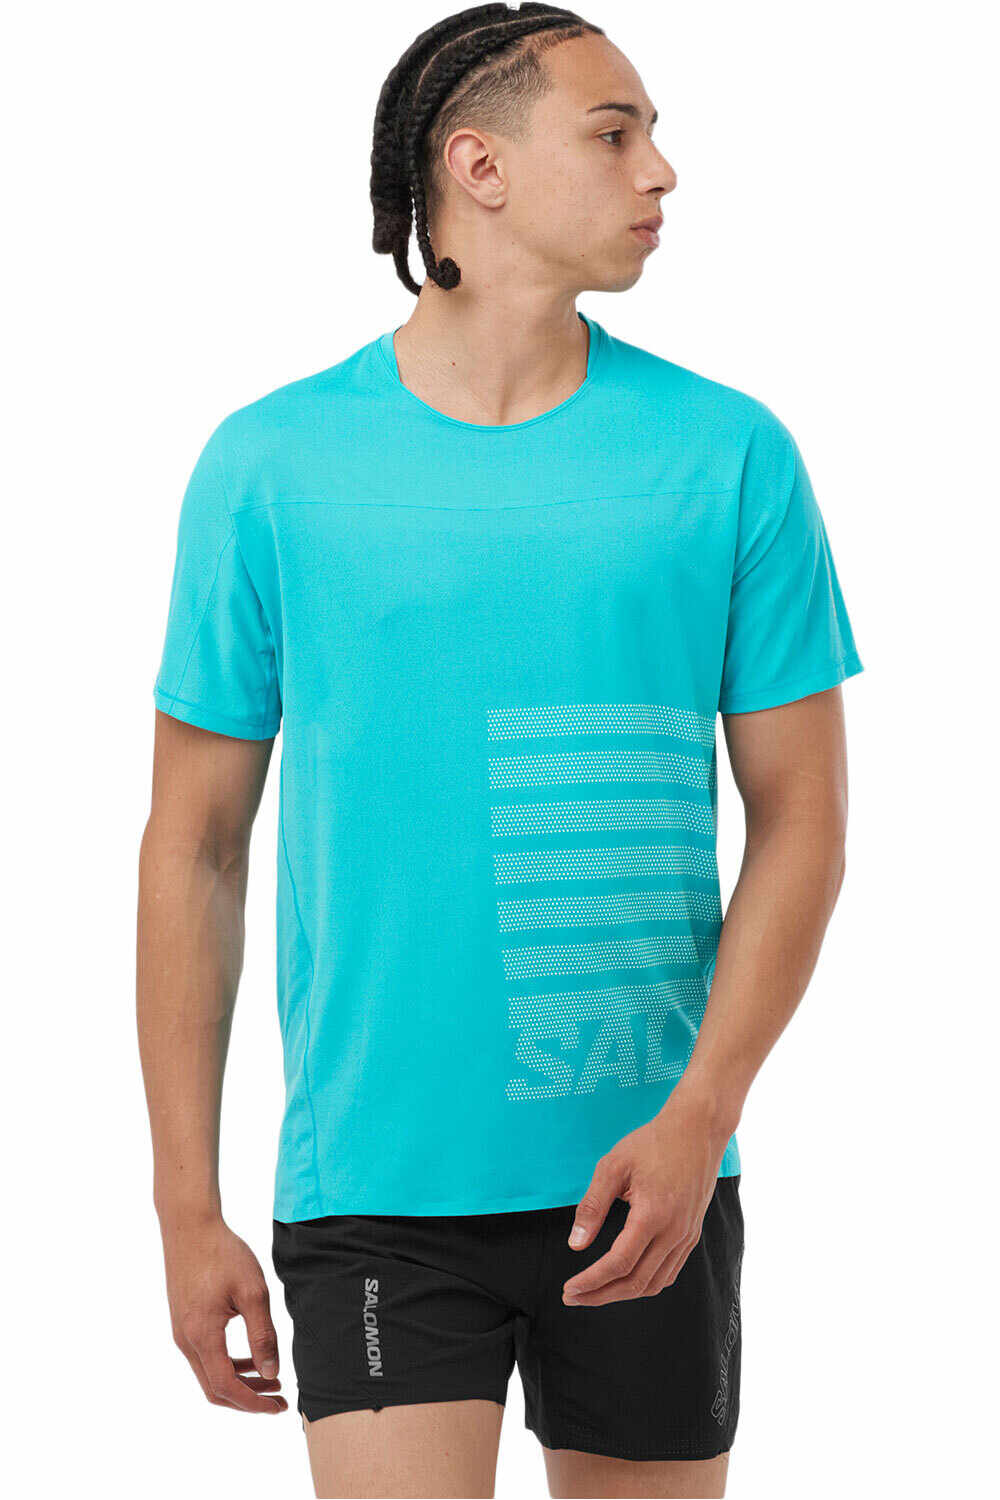 Salomon camisetas trail running manga corta hombre SENSE AERO SS TEE GFX M vista frontal